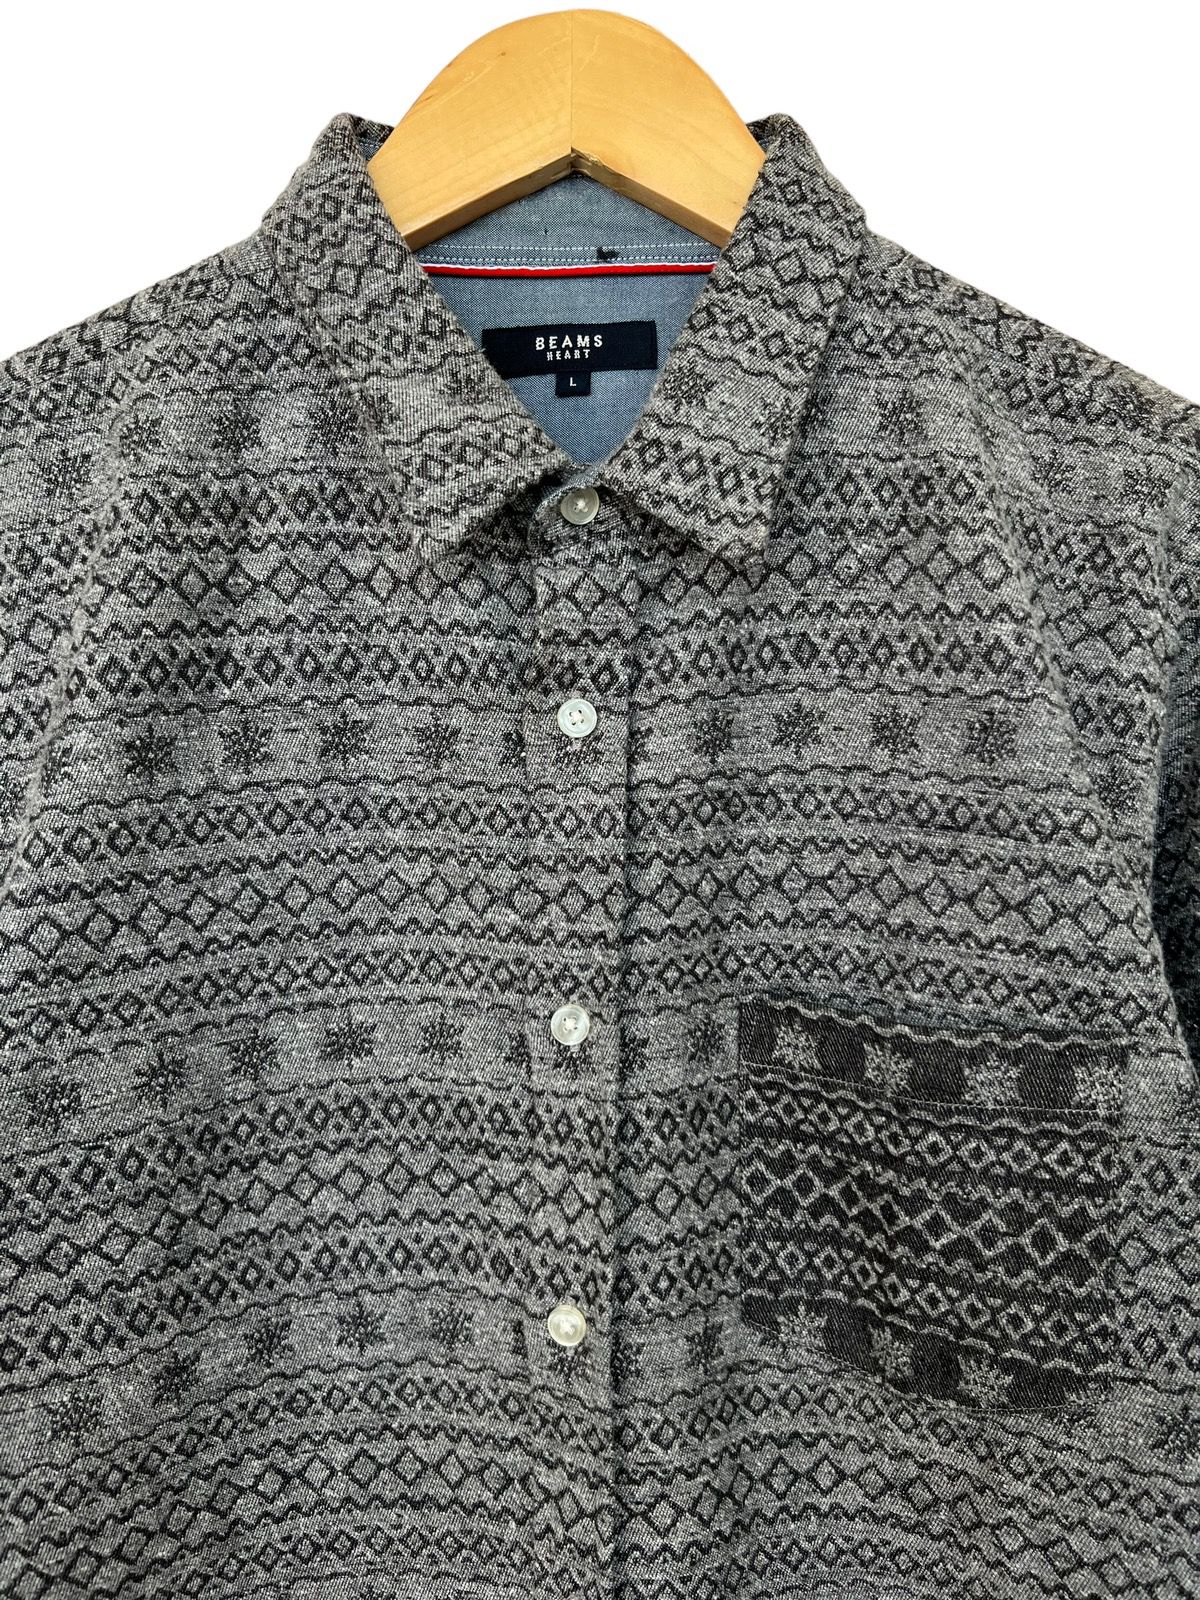 Beams Japan Checkered Long Sleeve Button Up Flanner Shirt M - 5